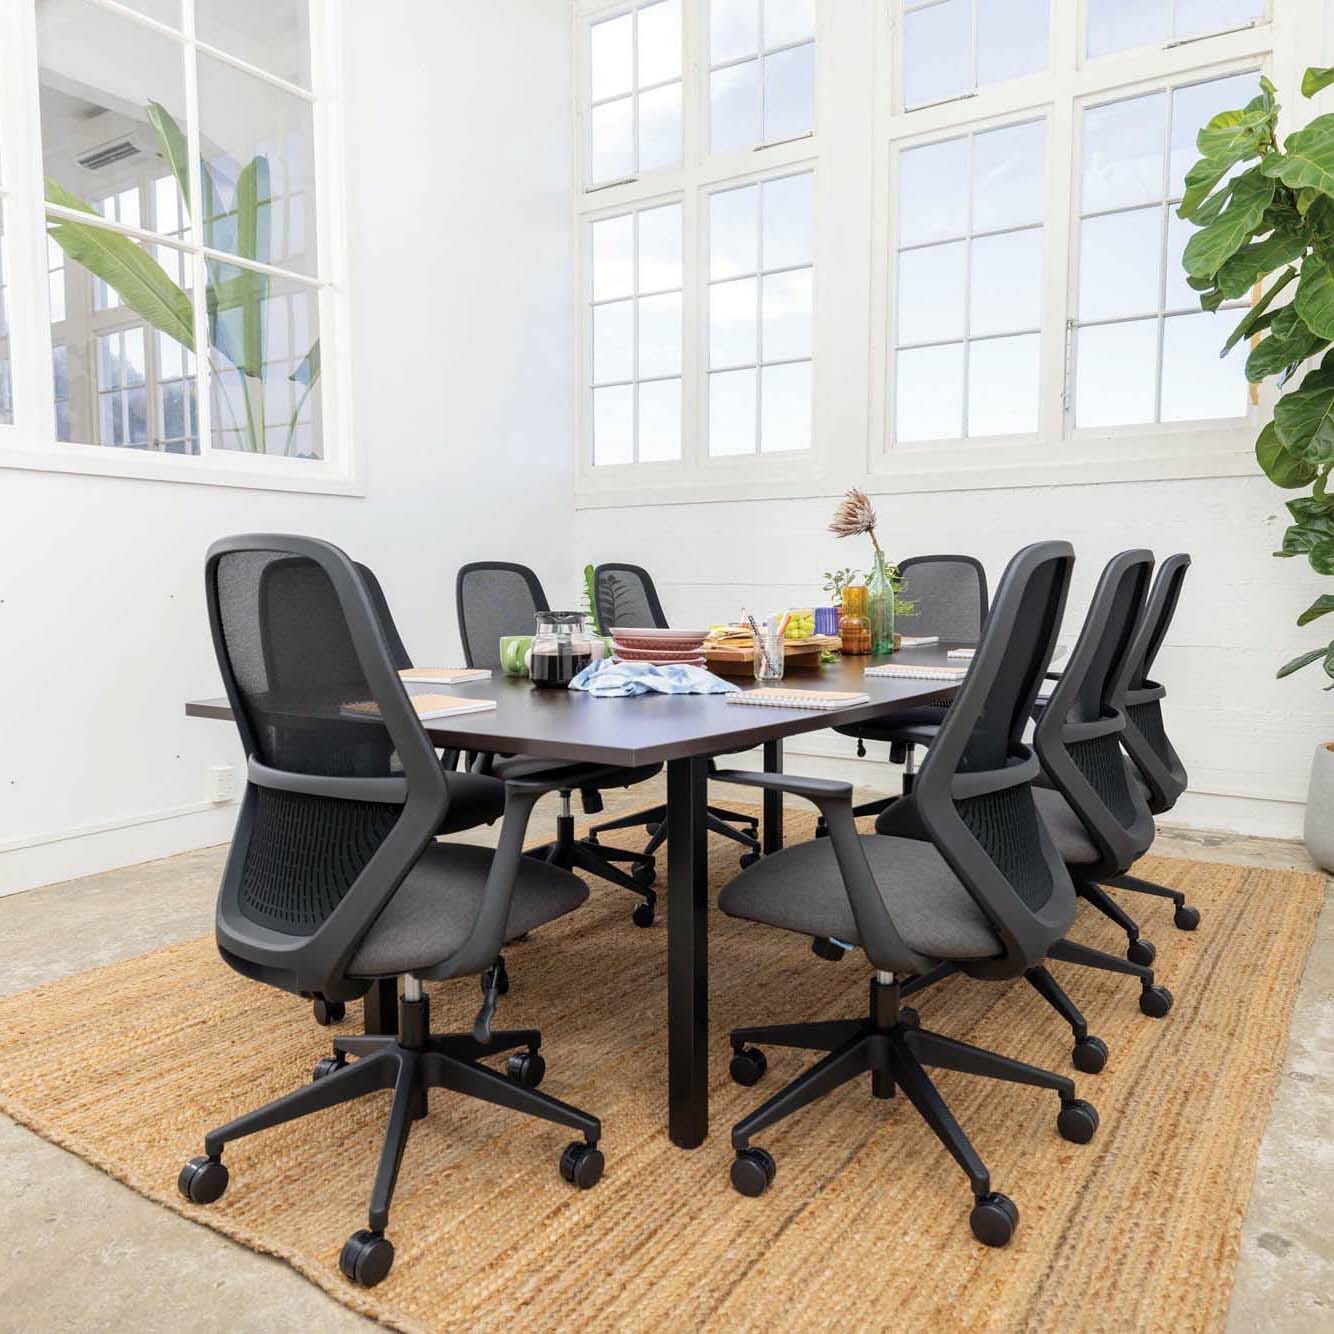 mondo soho chair in modern boardroom